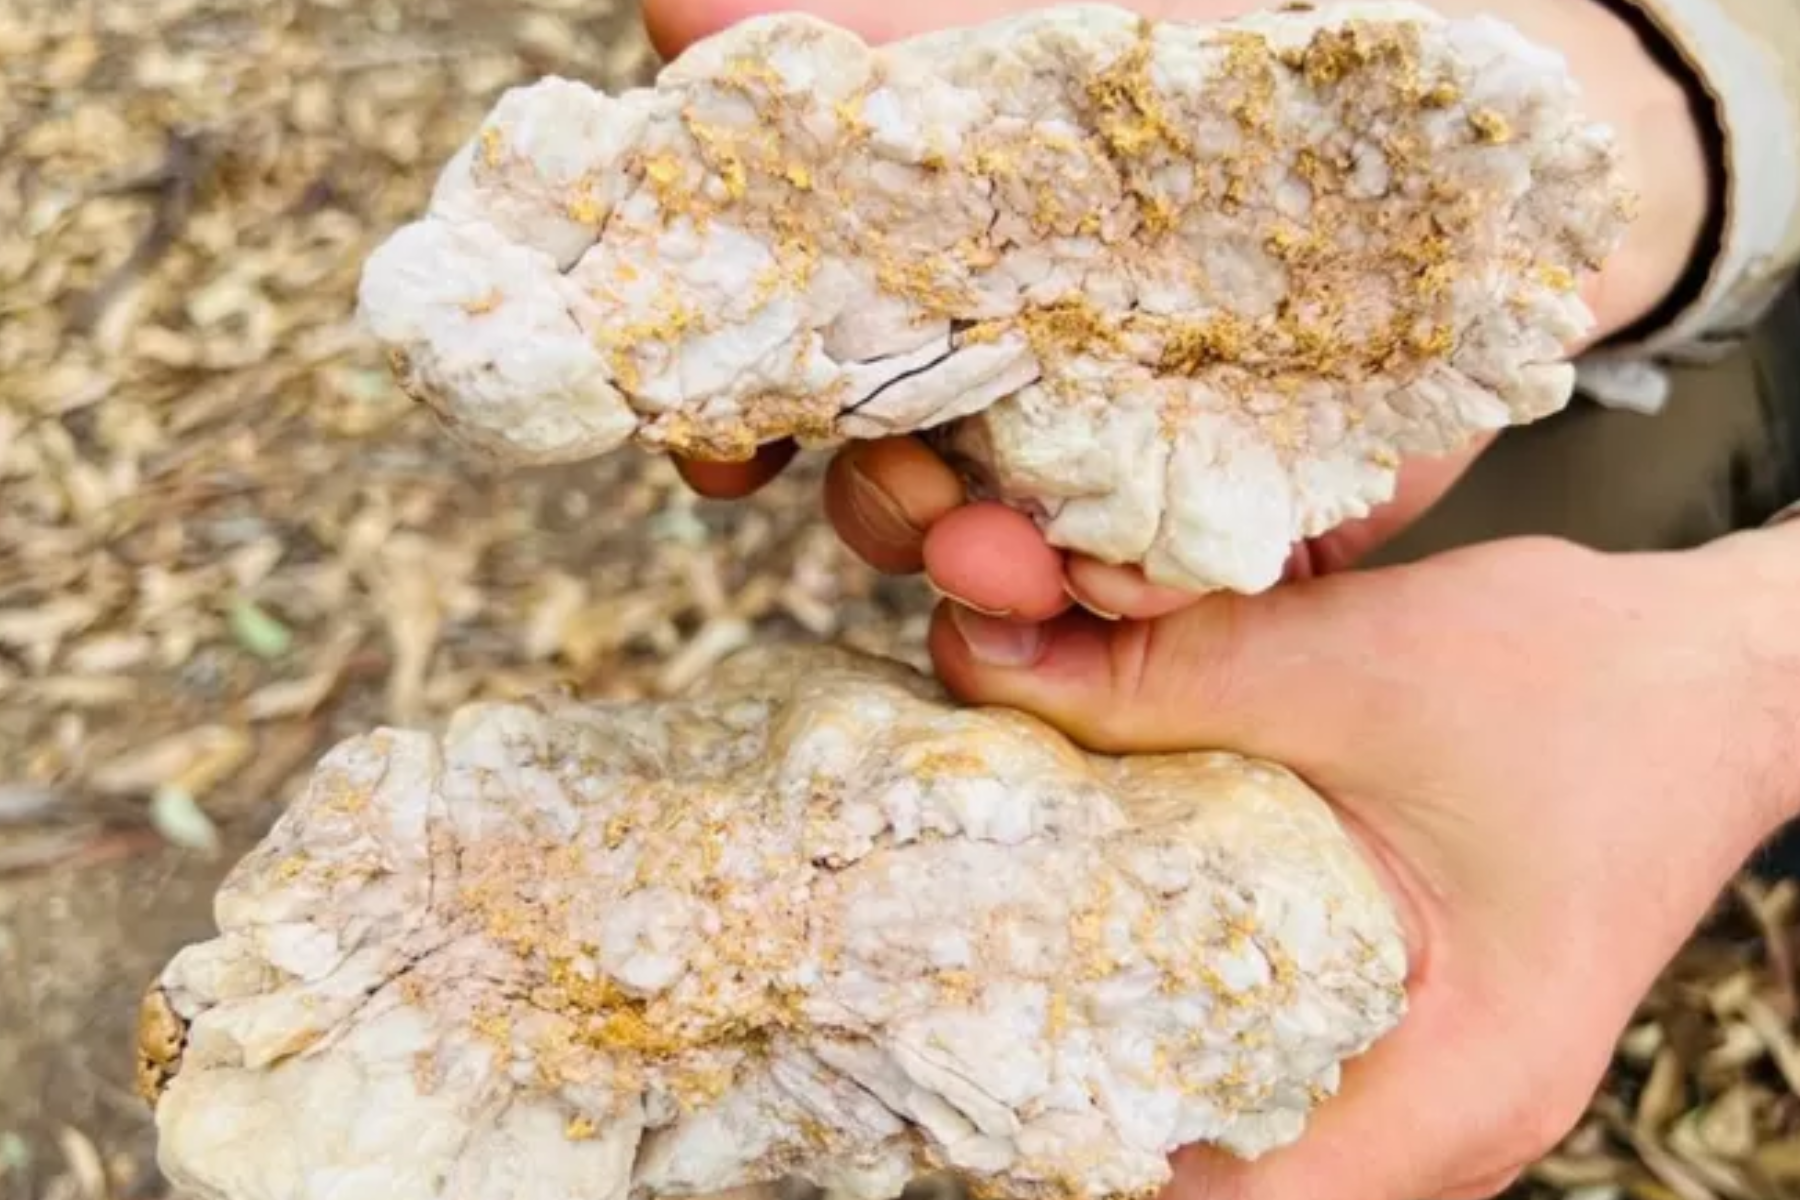 Amateur Australian Gold Digger Finds Massive Nugget